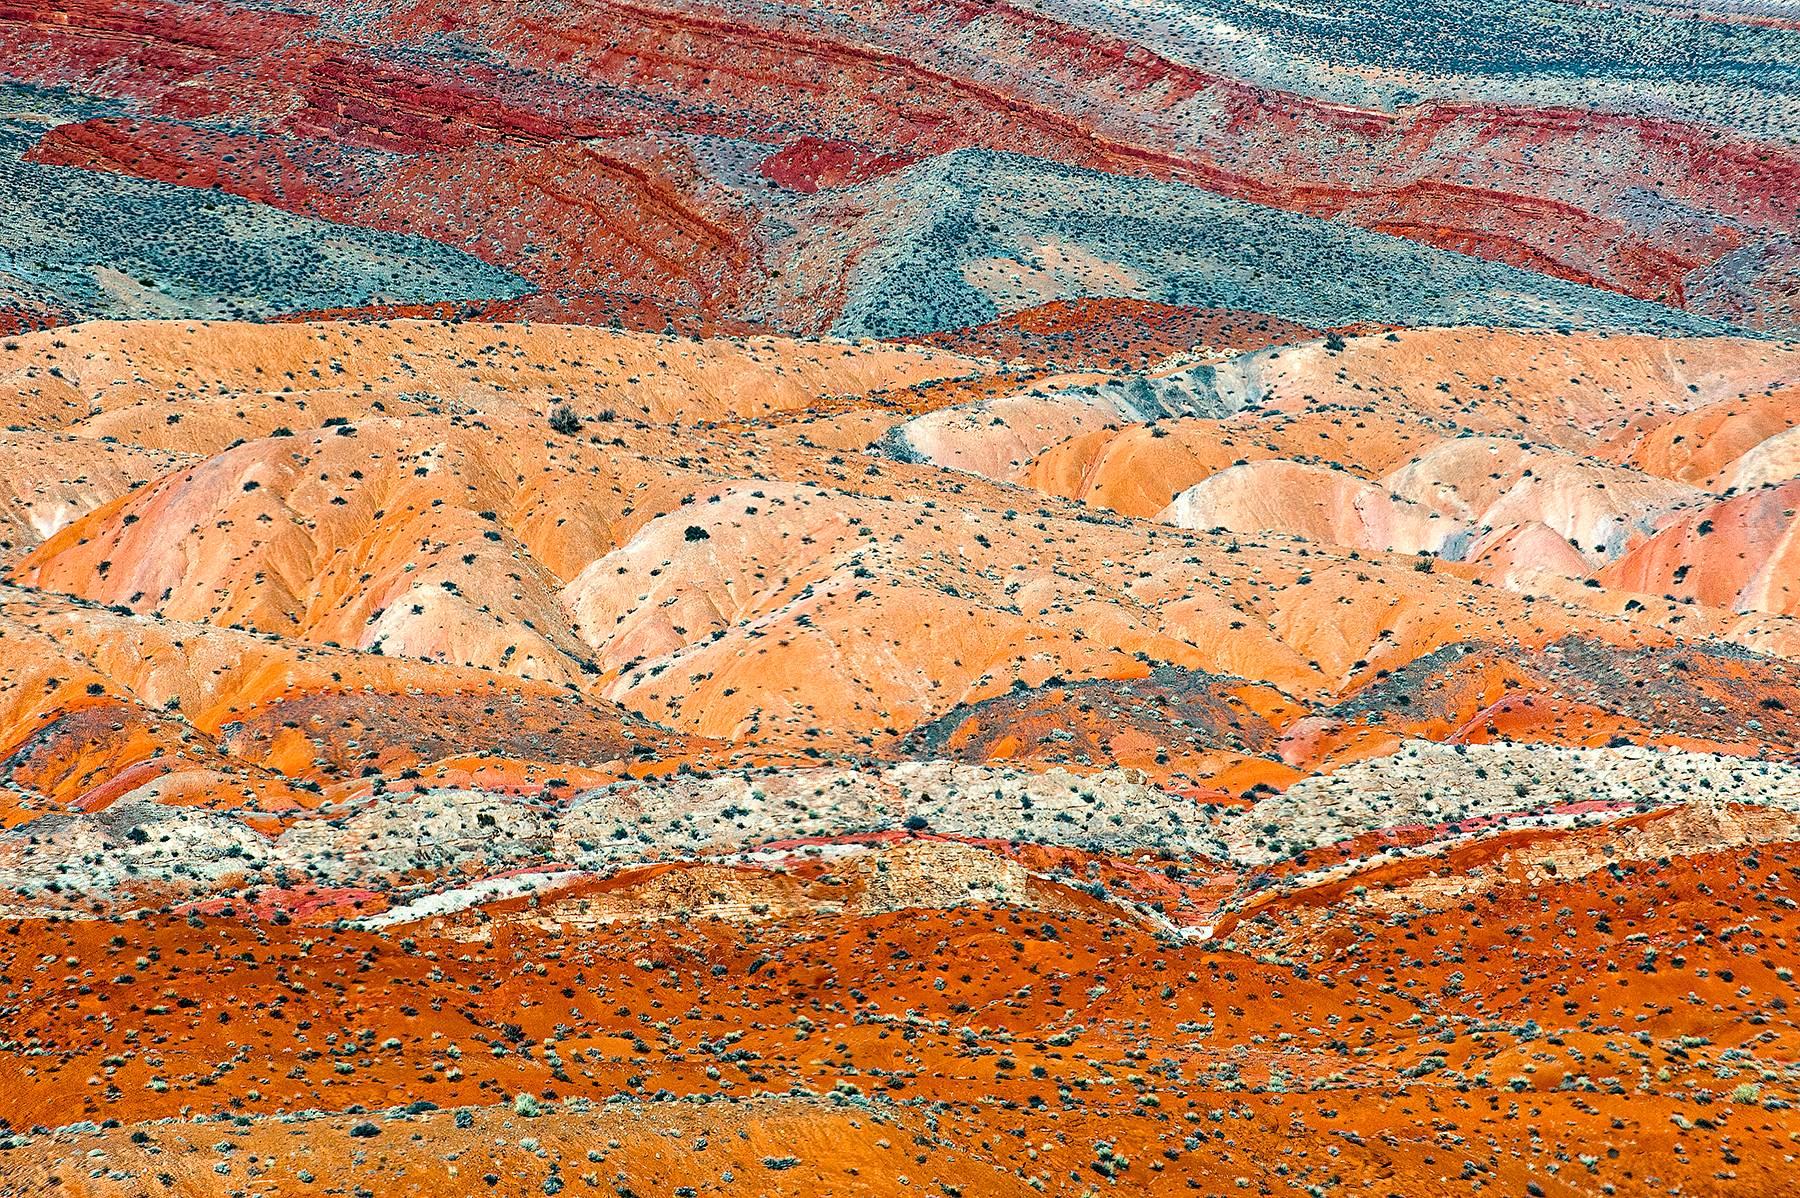 Zoe Wetherall Landscape Photograph - "Rocks", dye sublimated print on aluminum 